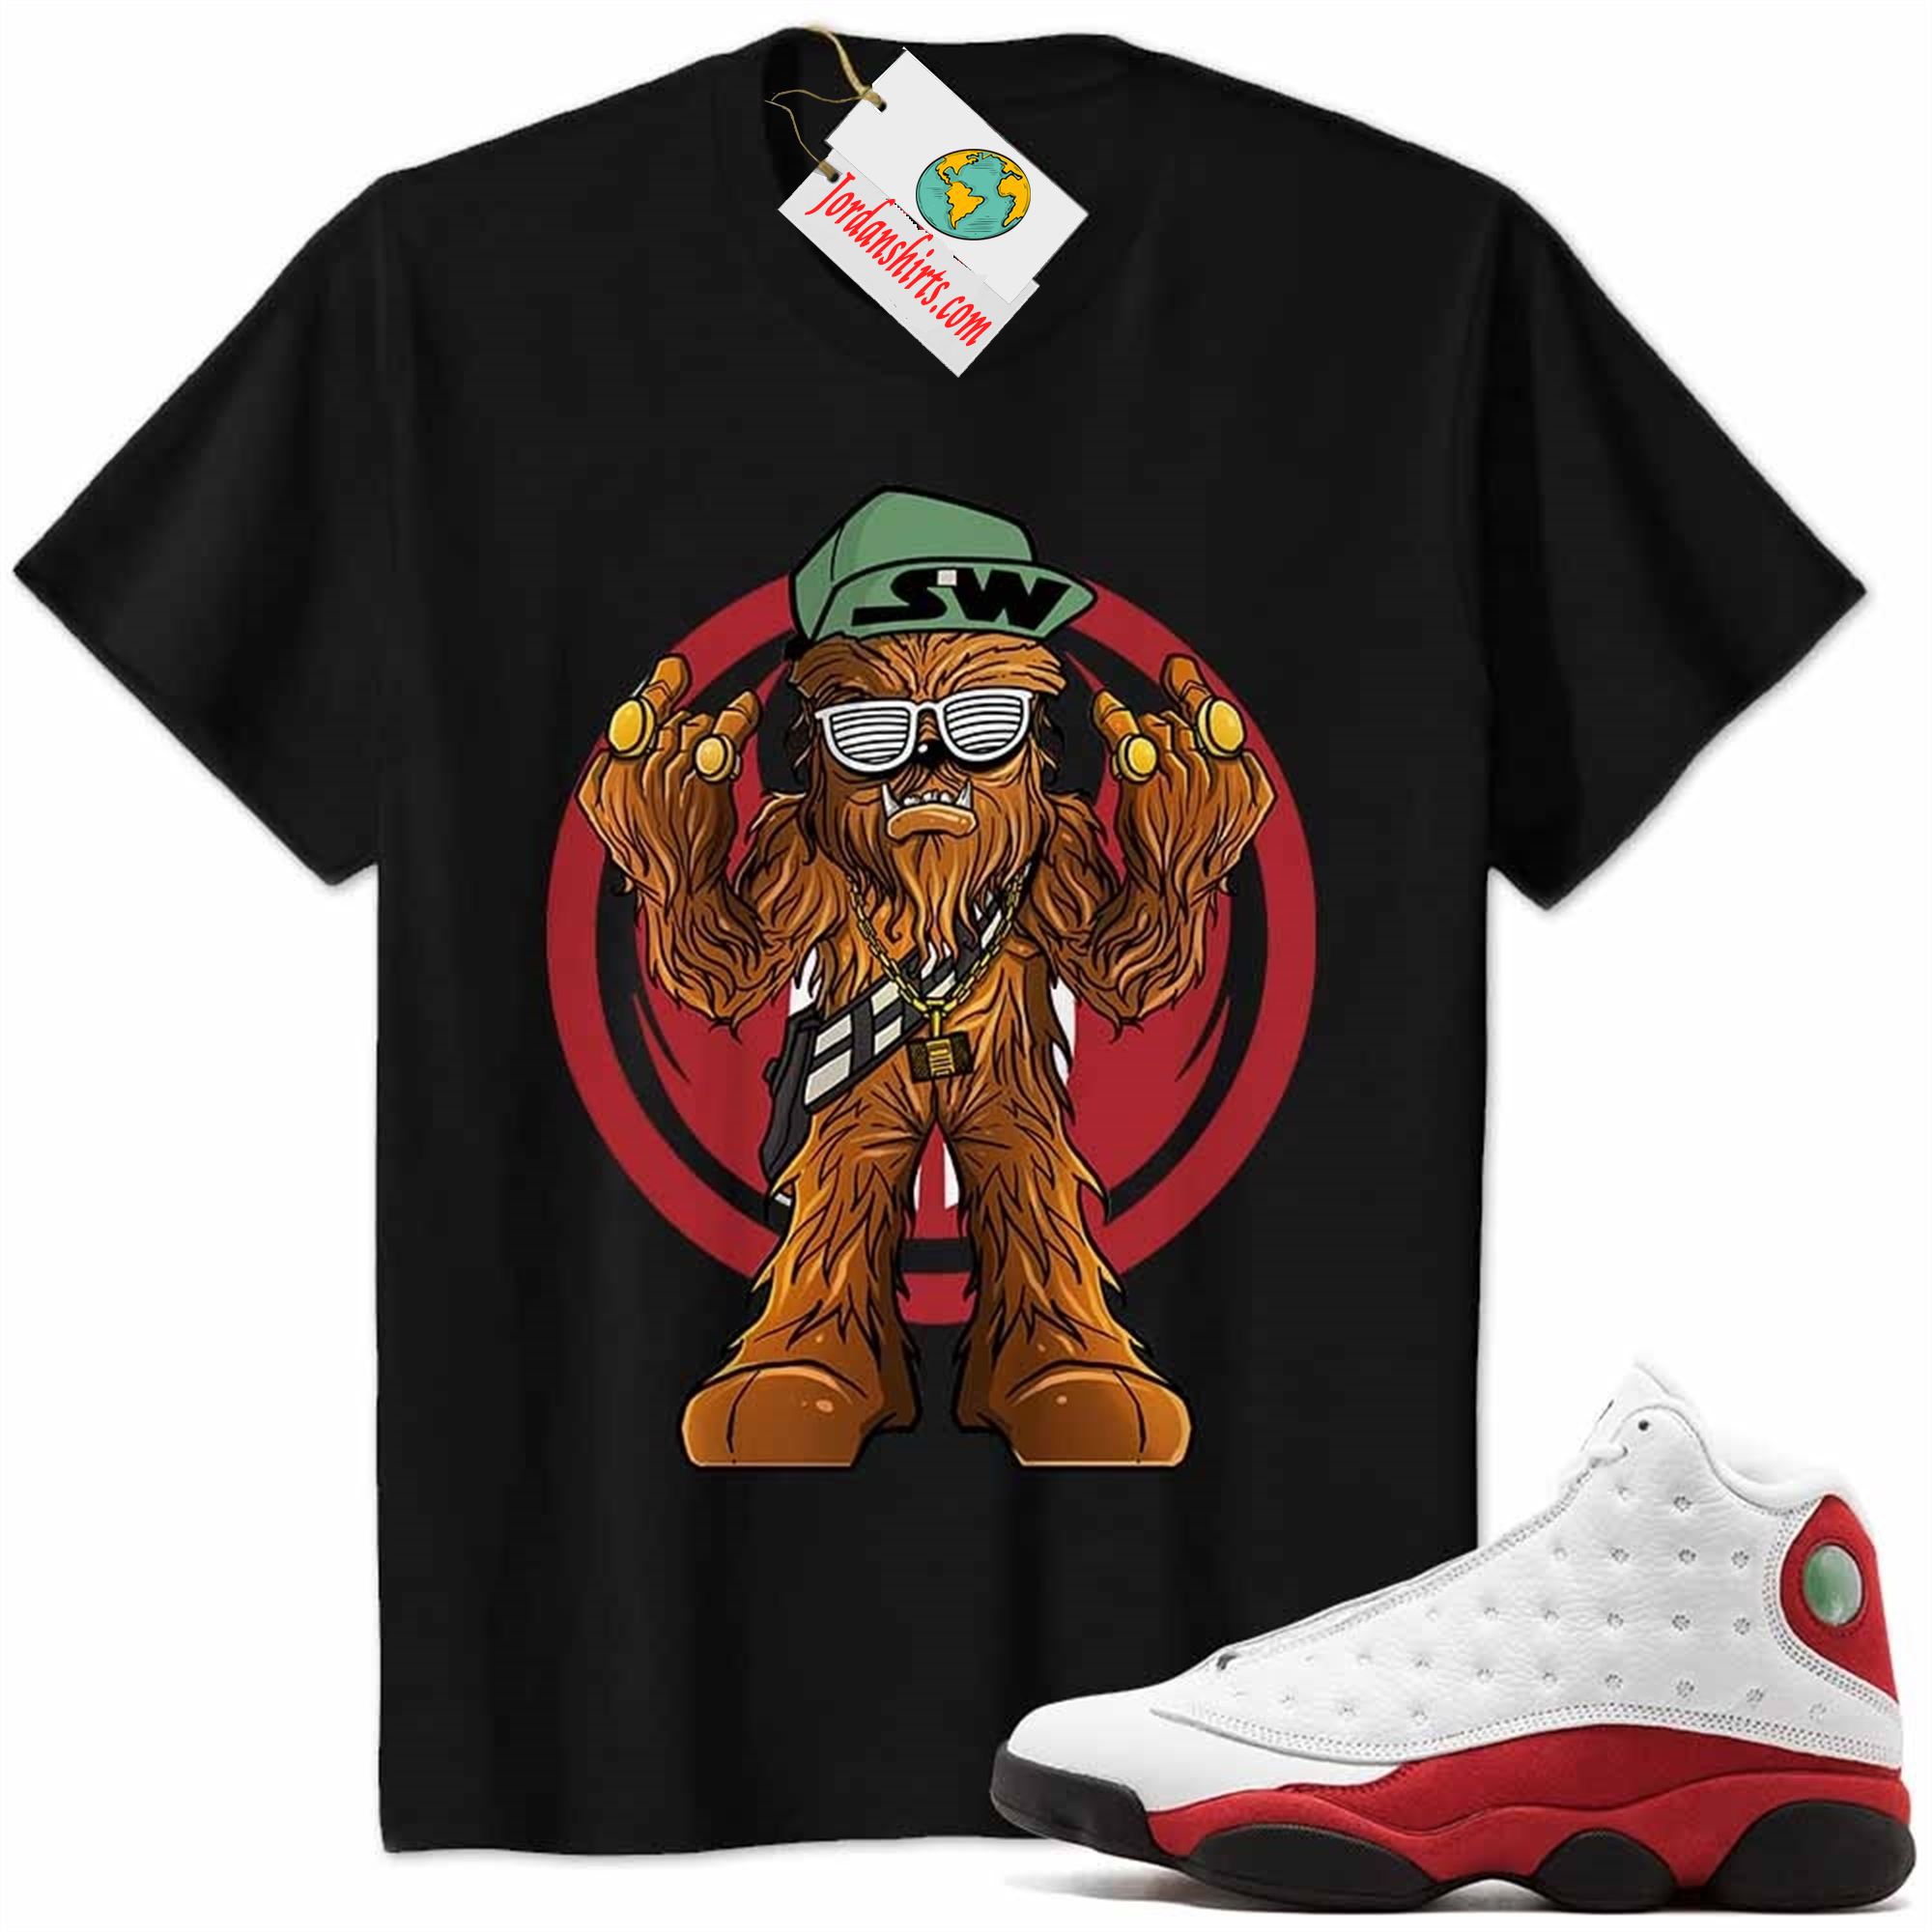 Jordan 13 Shirt, Gangster Chewbacca Stars War Black Air Jordan 13 Chicago 13s Size Up To 5xl